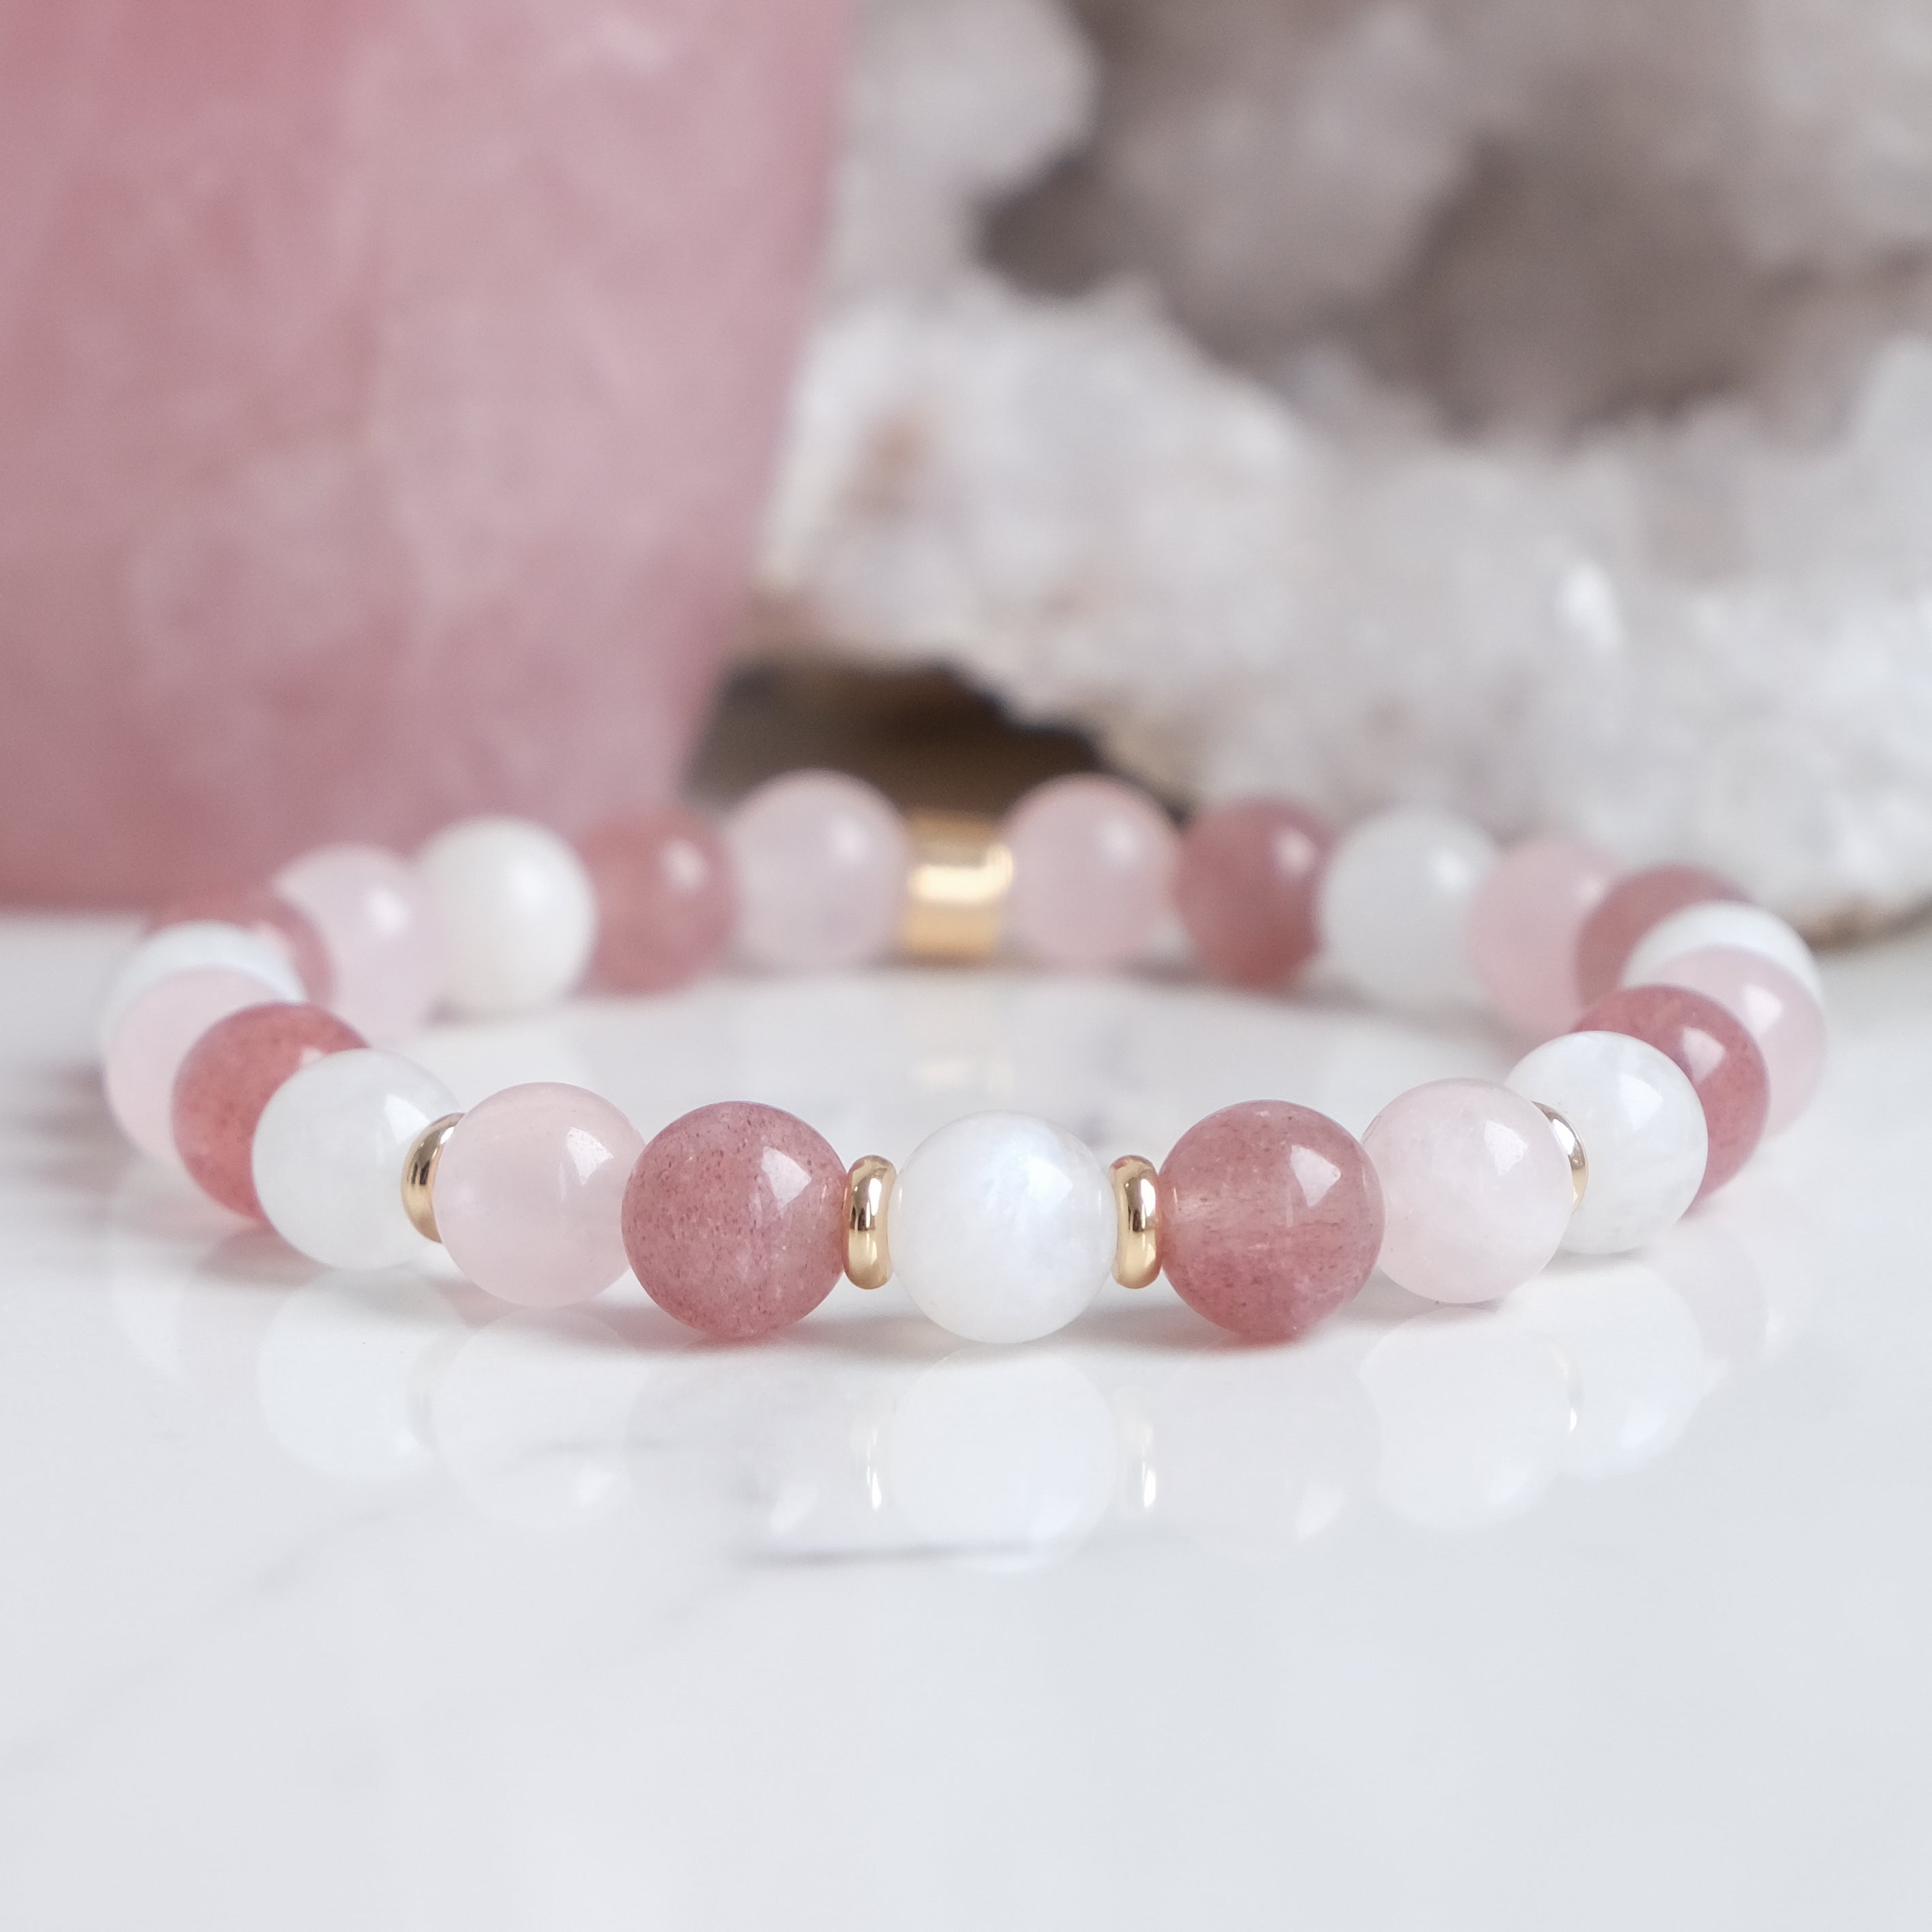 A moonstone, strawberry quartz and rose quartz gemstone bracelet with gold accessories